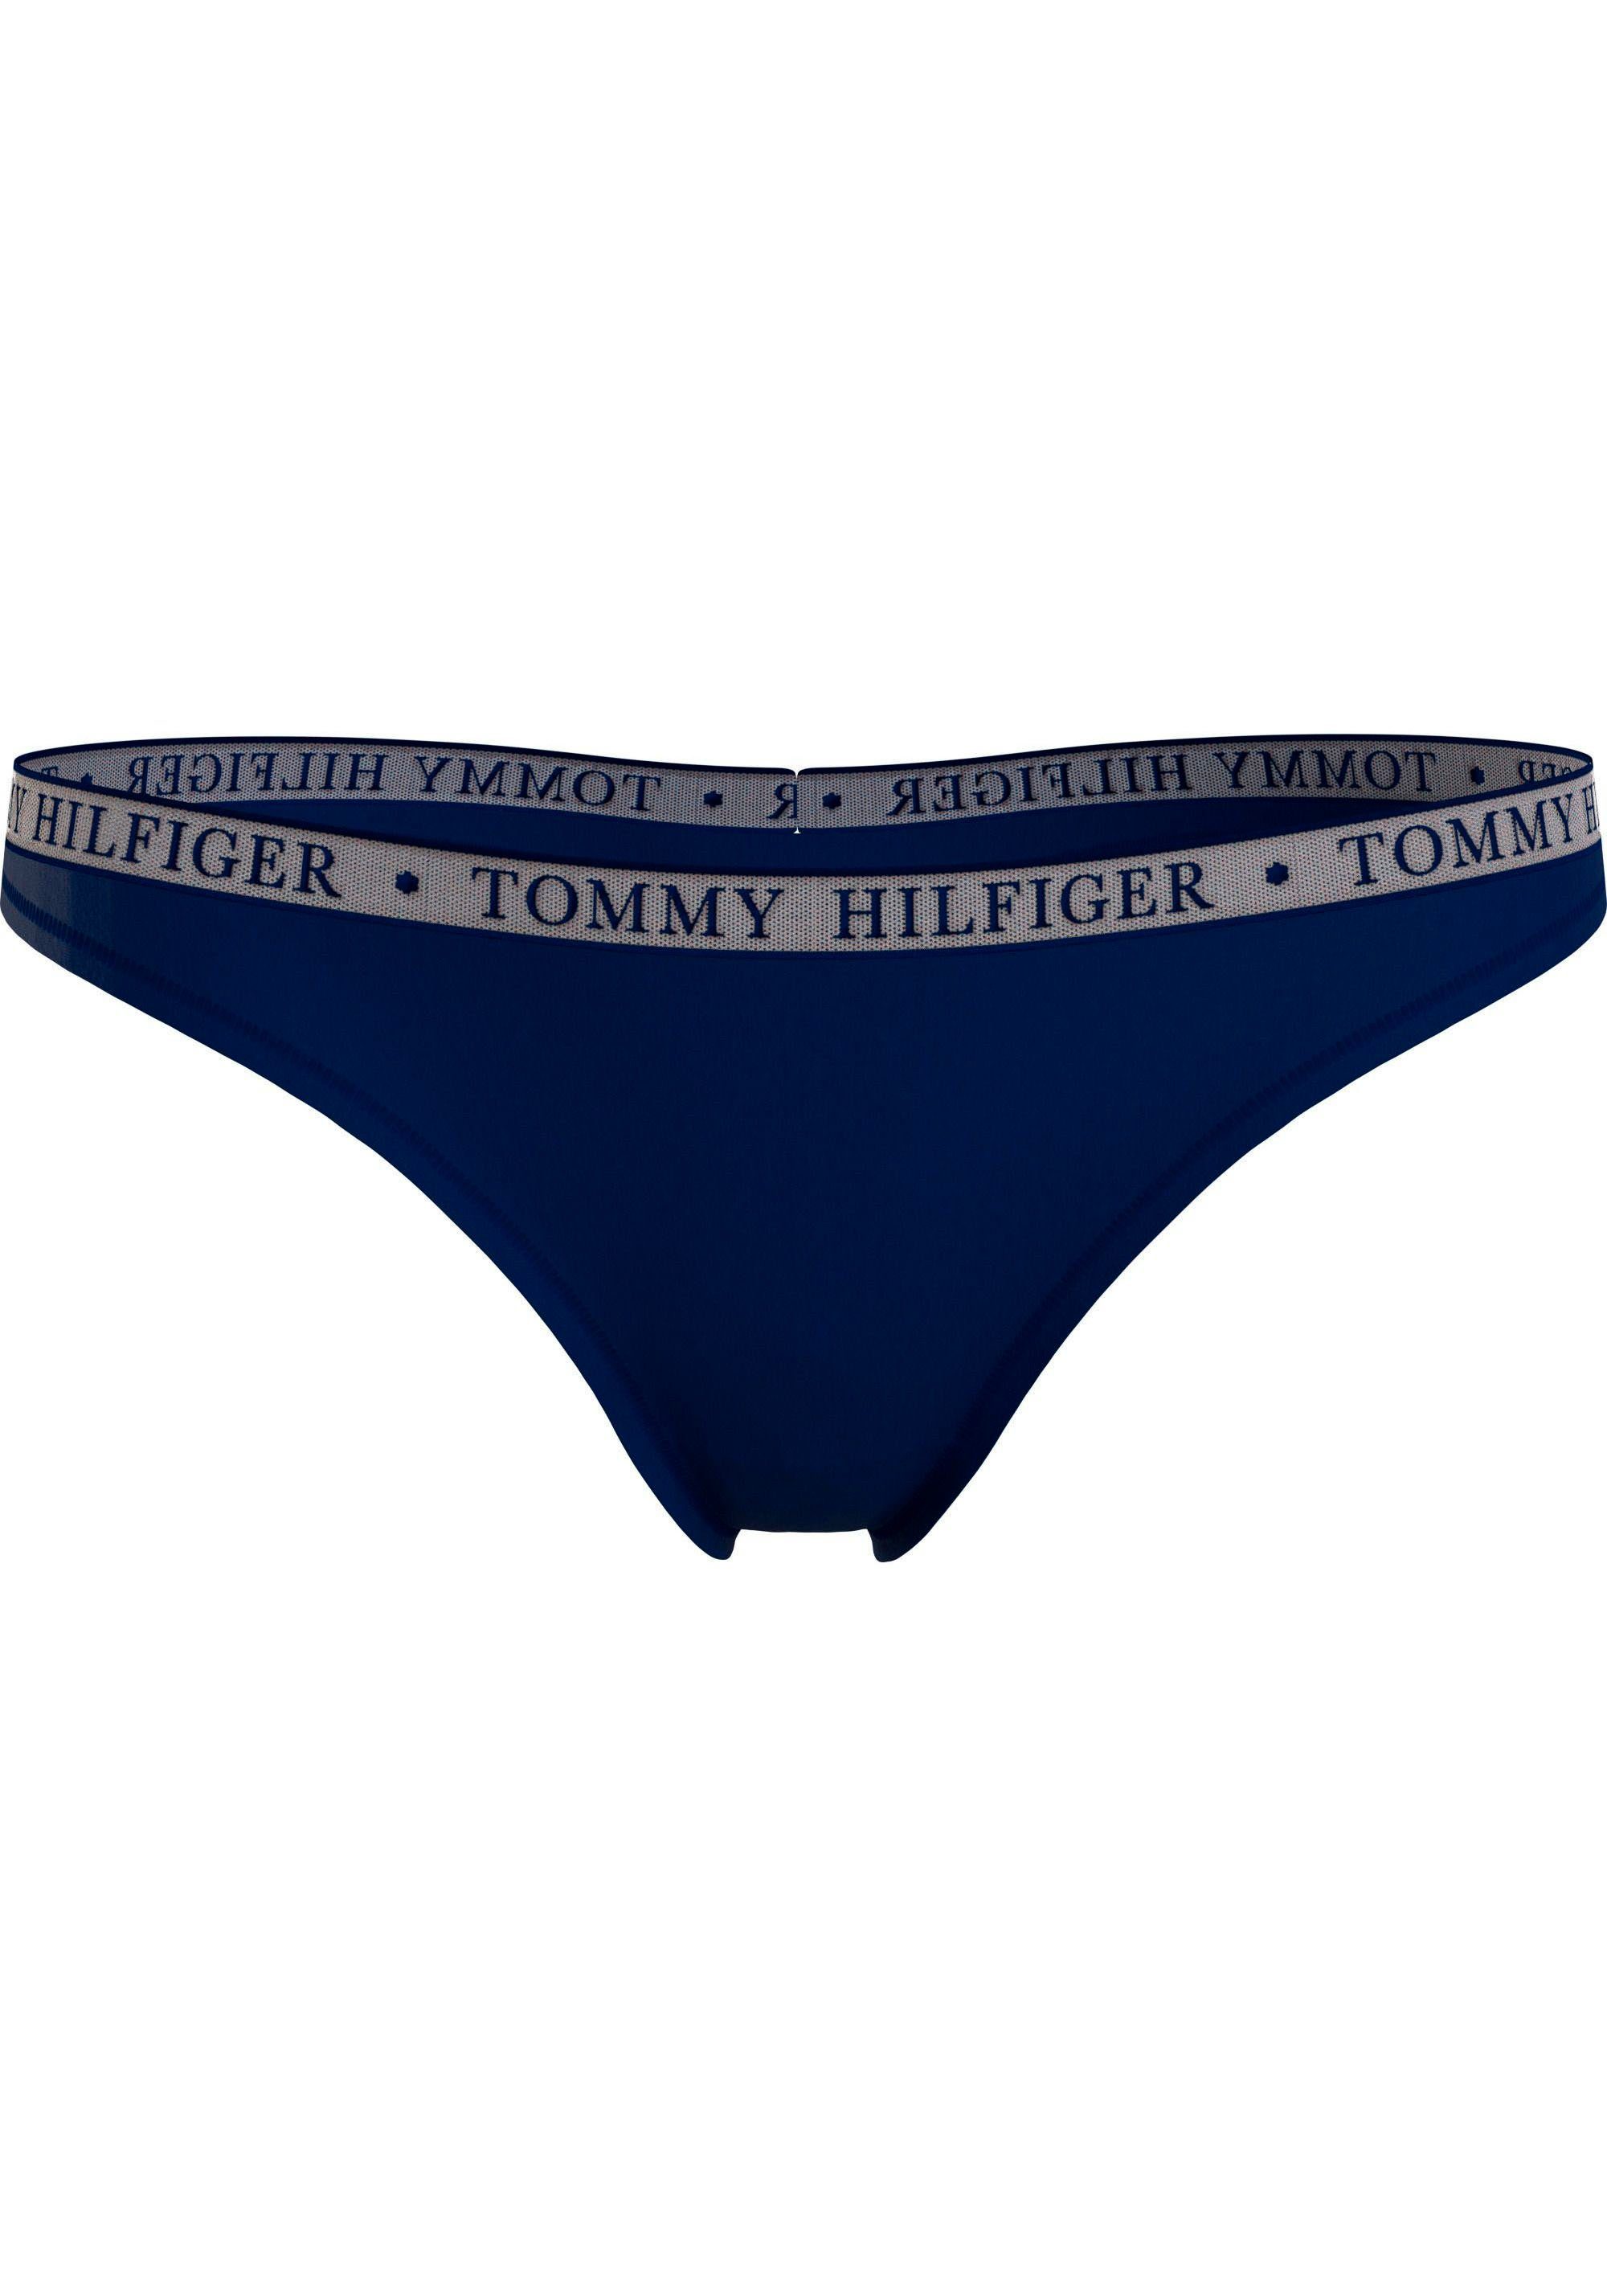 Hilfiger T-String Hilfiger Tommy LACE 3er-Pack) Logobund 3P (EXT THONG Tommy Pink_Dawn/Glam_Blue/Desert_Sky SIZES) mit (Packung, Underwear